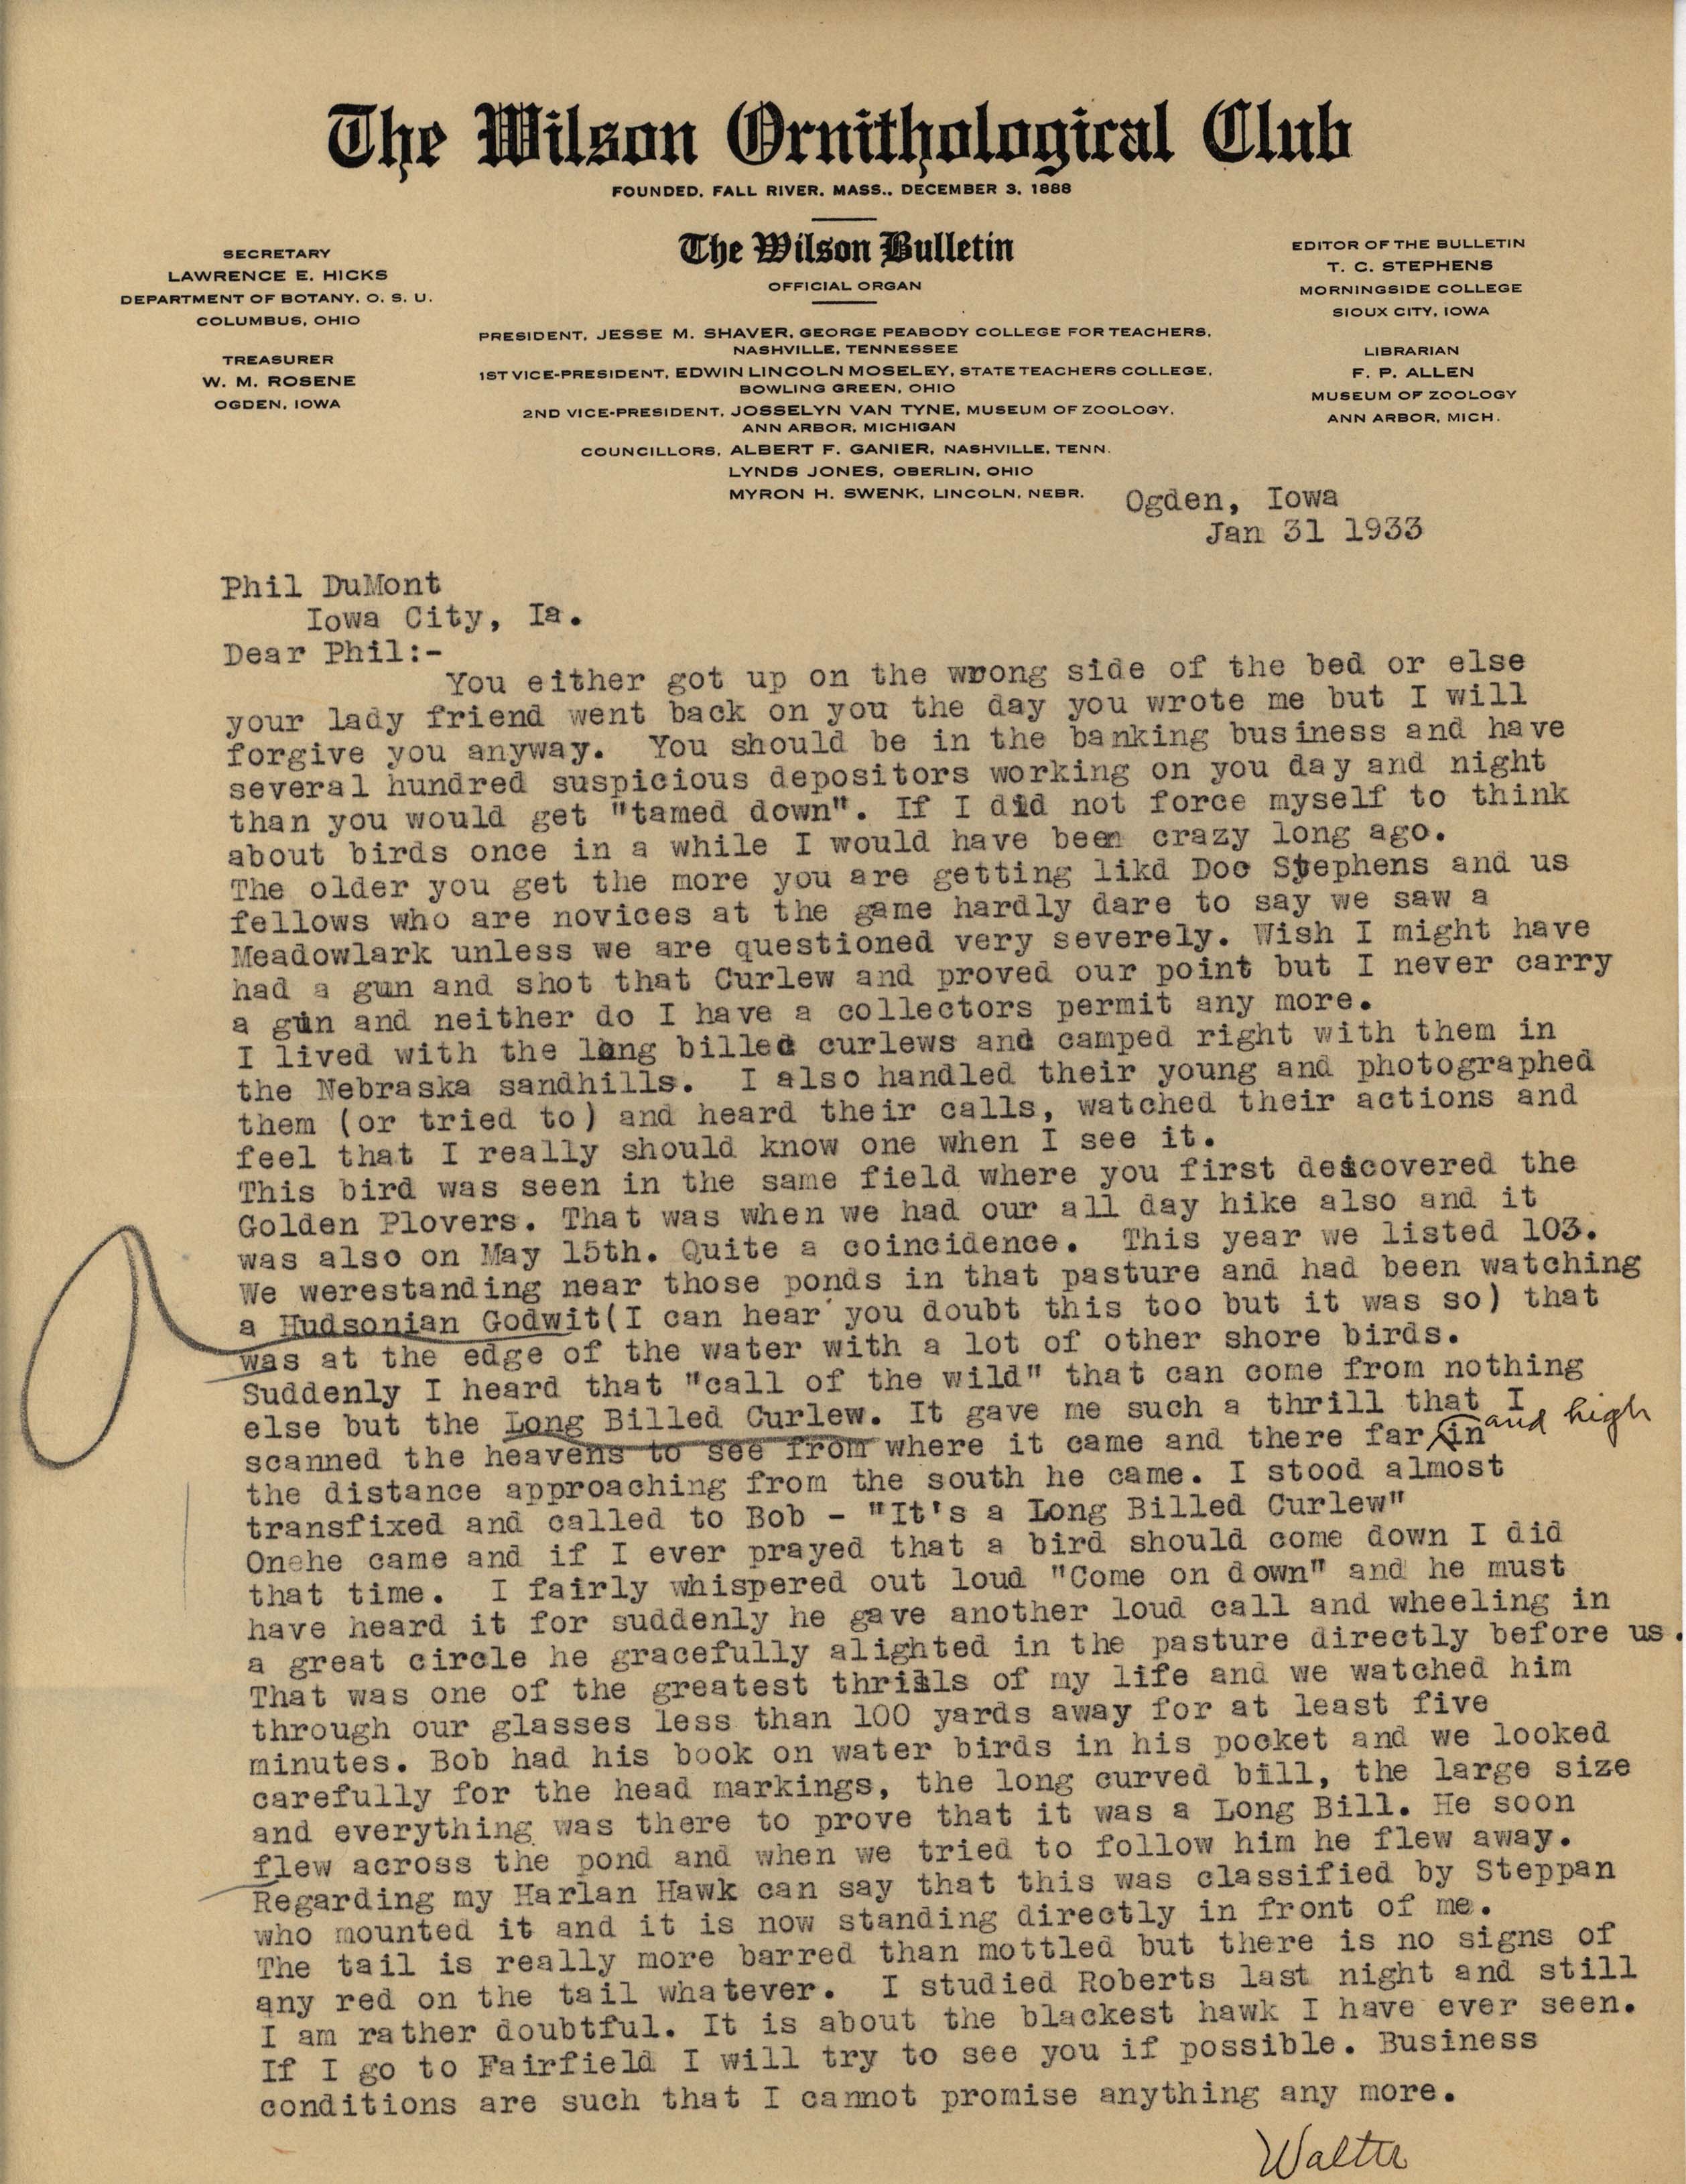 Walter Rosene letter to Philip DuMont regarding Long-billed Curlew sighting, January 31, 1933